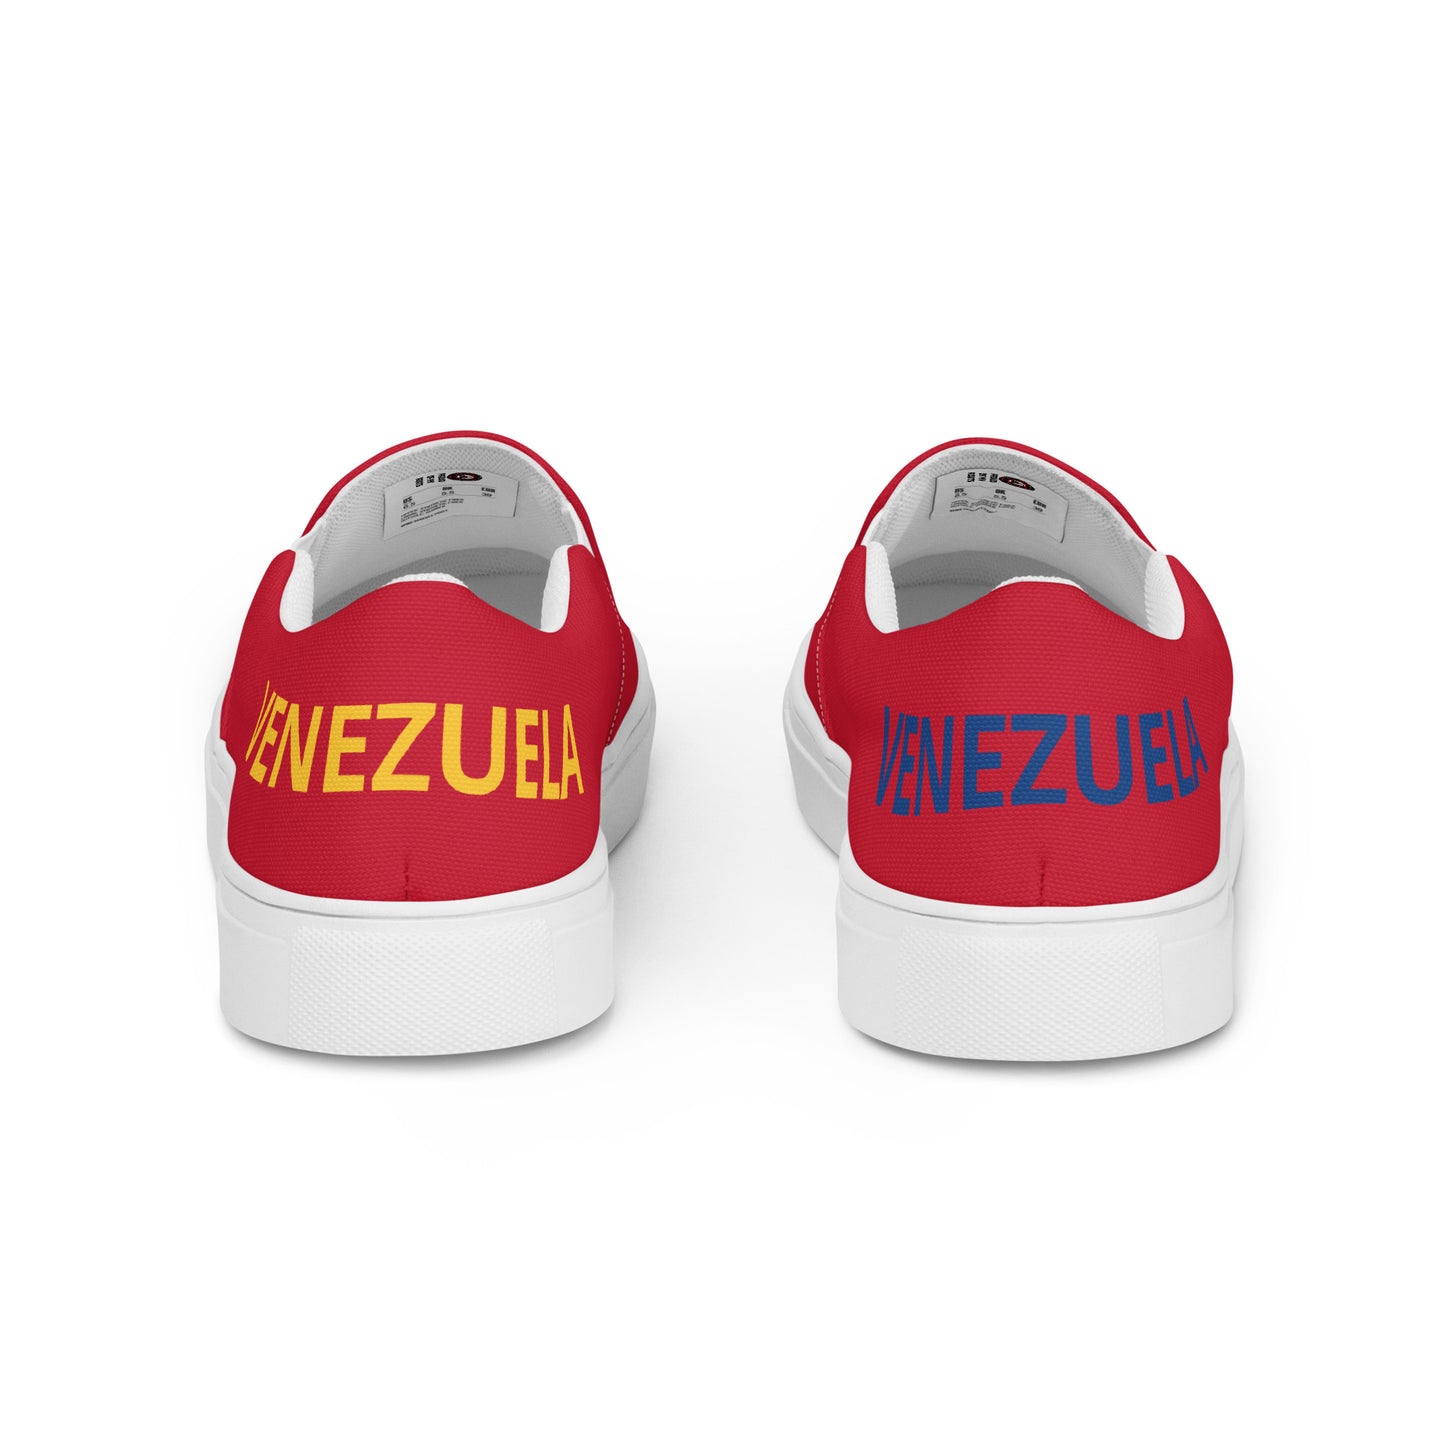 Venezuela - Women - Red - Slip-on shoes